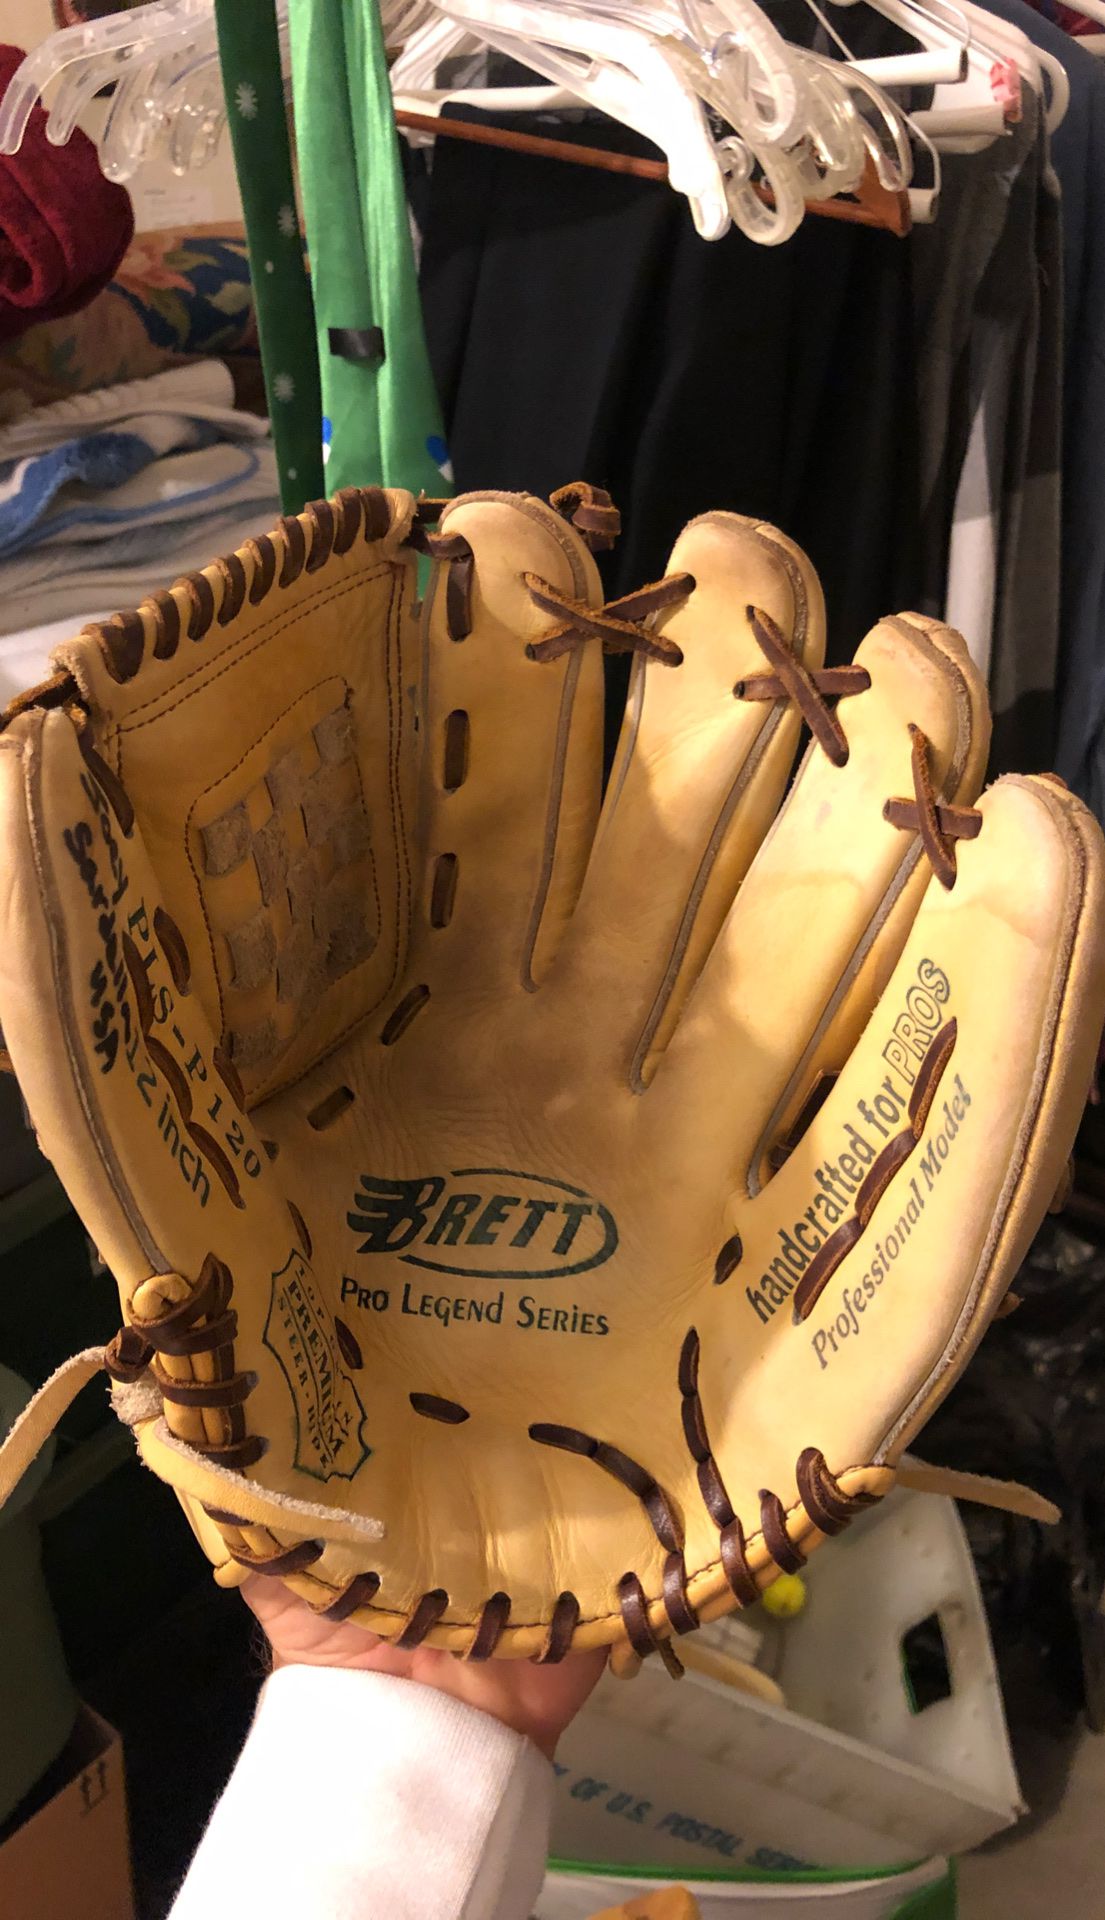 George Brett Pro Legend Series baseball glove